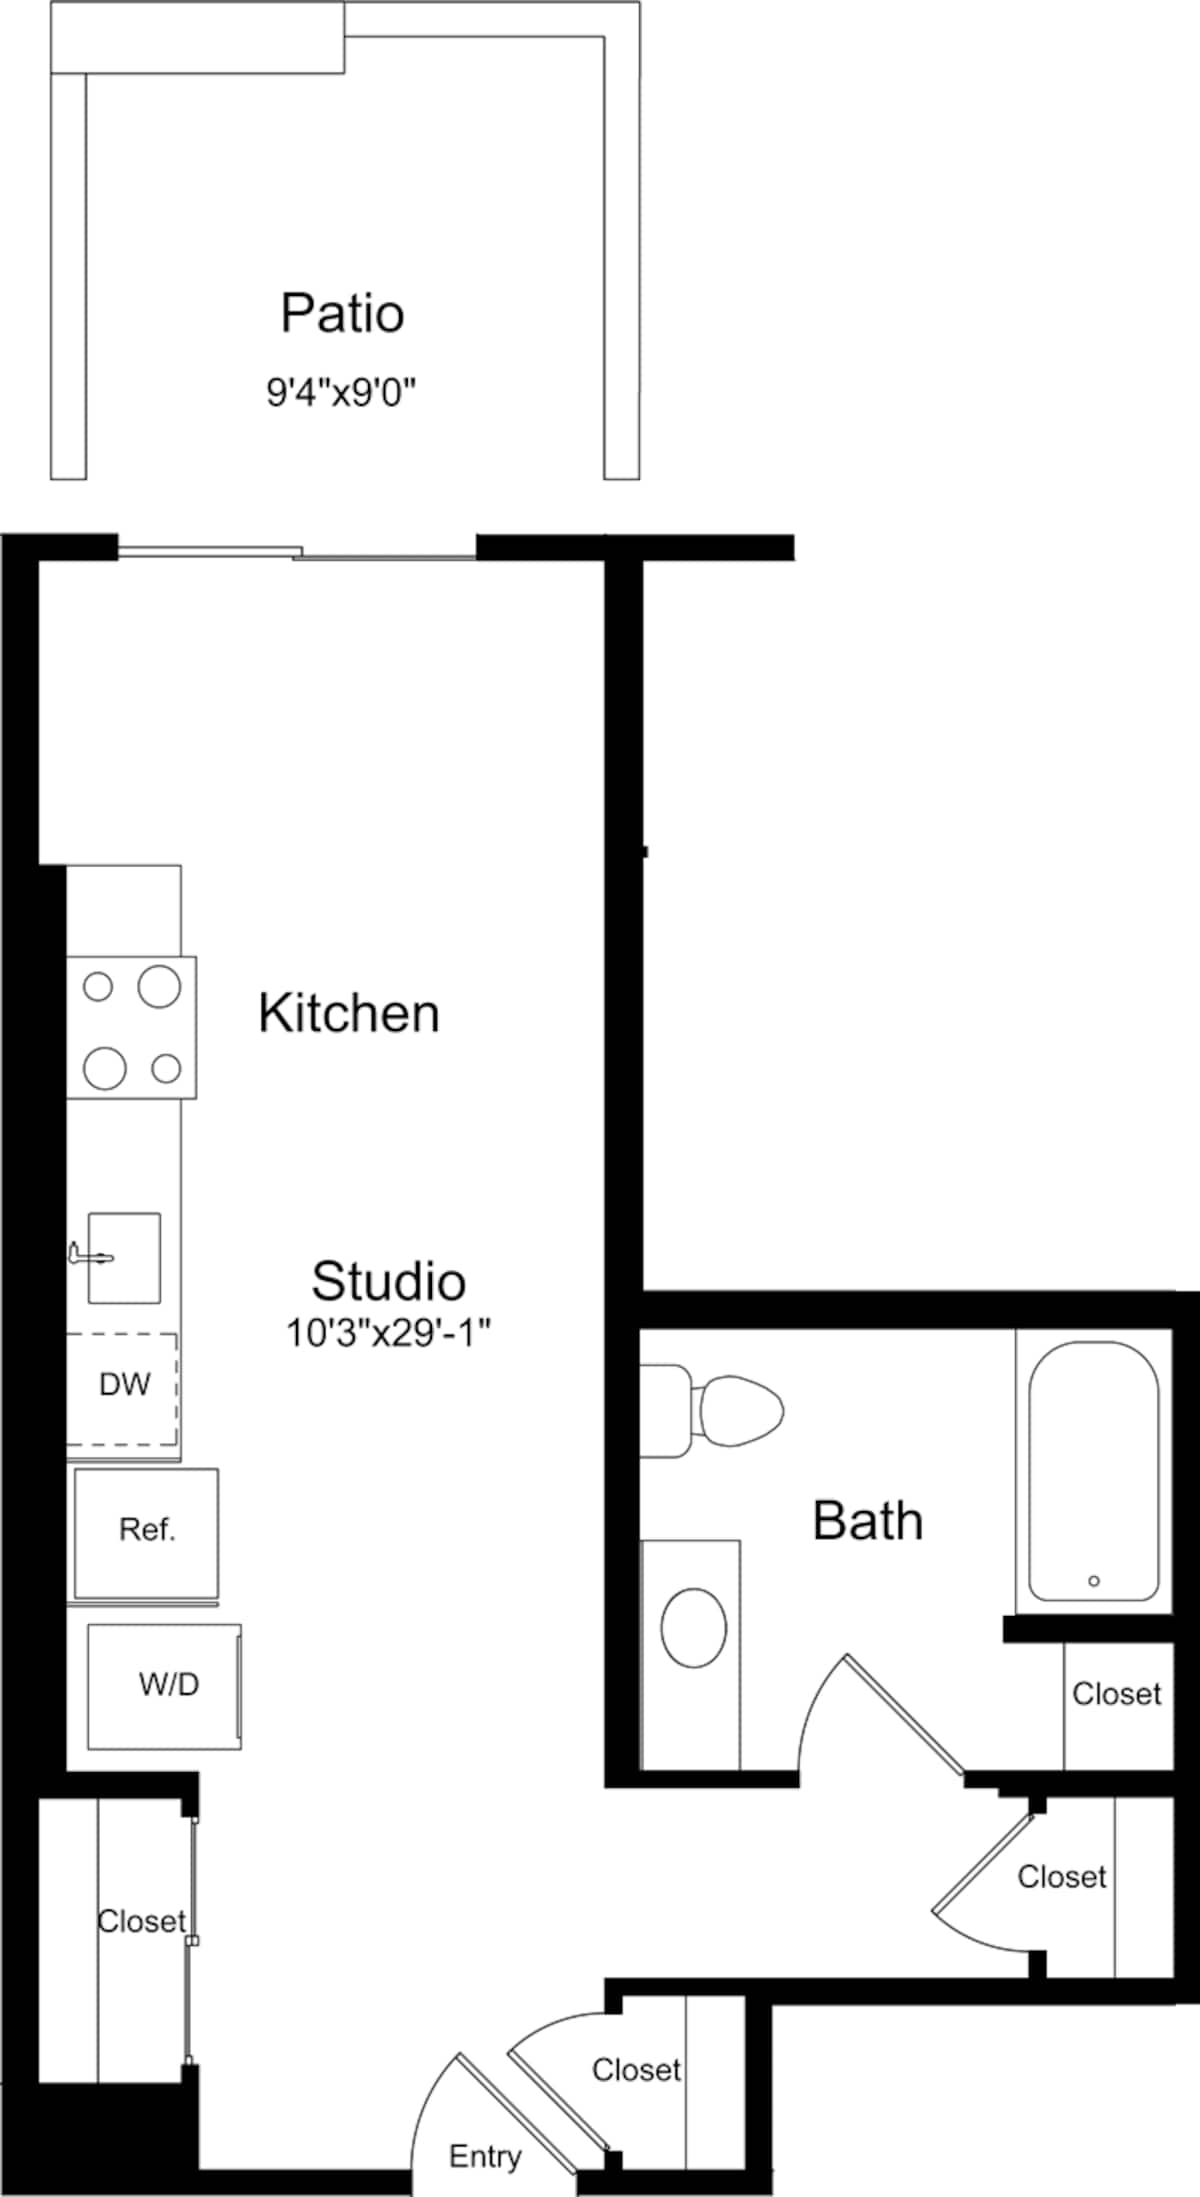 Floorplan diagram for S3 with Patio, showing Studio